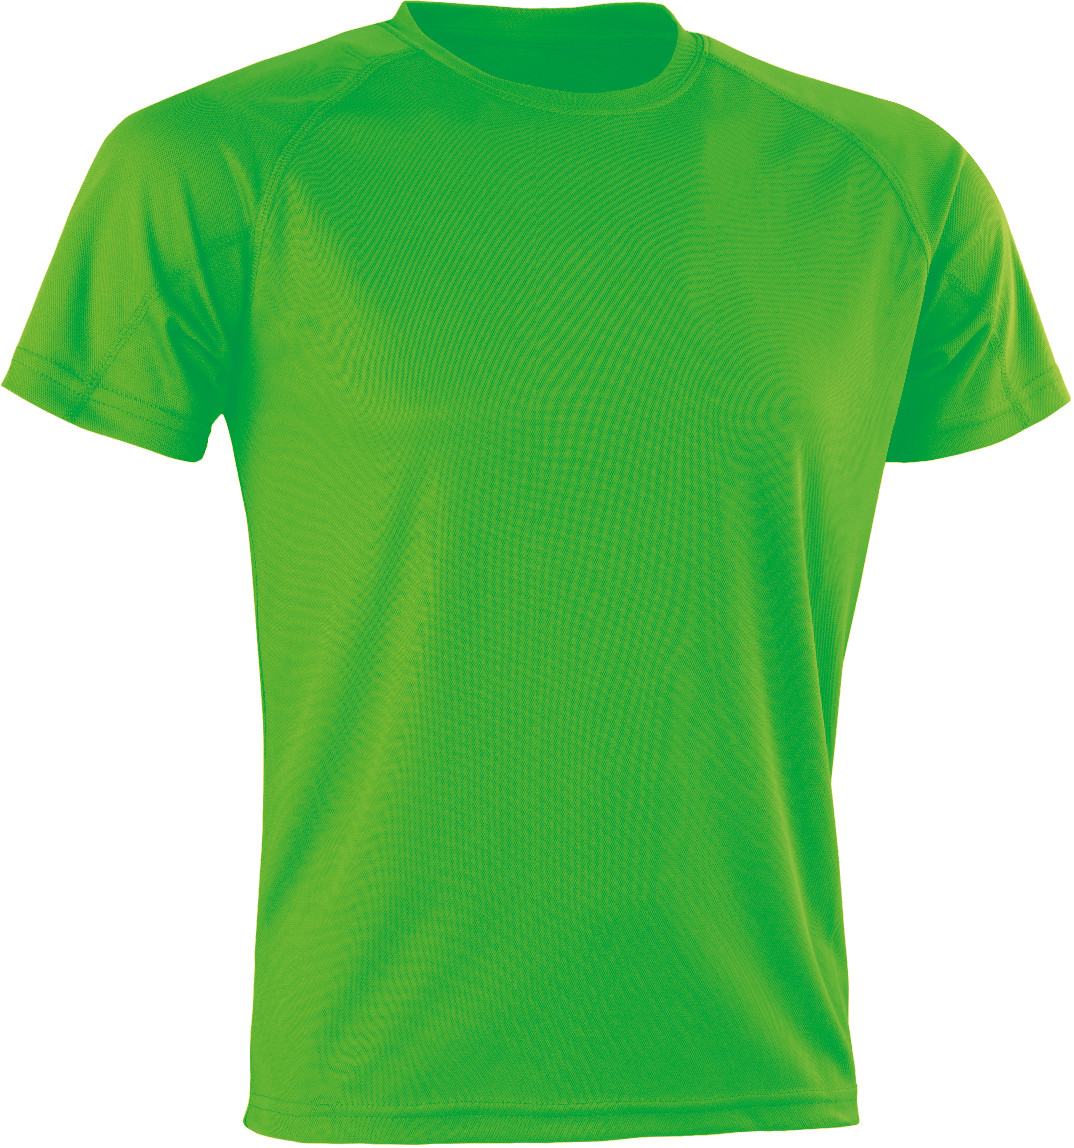 Sportovní tričko Aircool S287X Barva: neon green, Velikost: XL